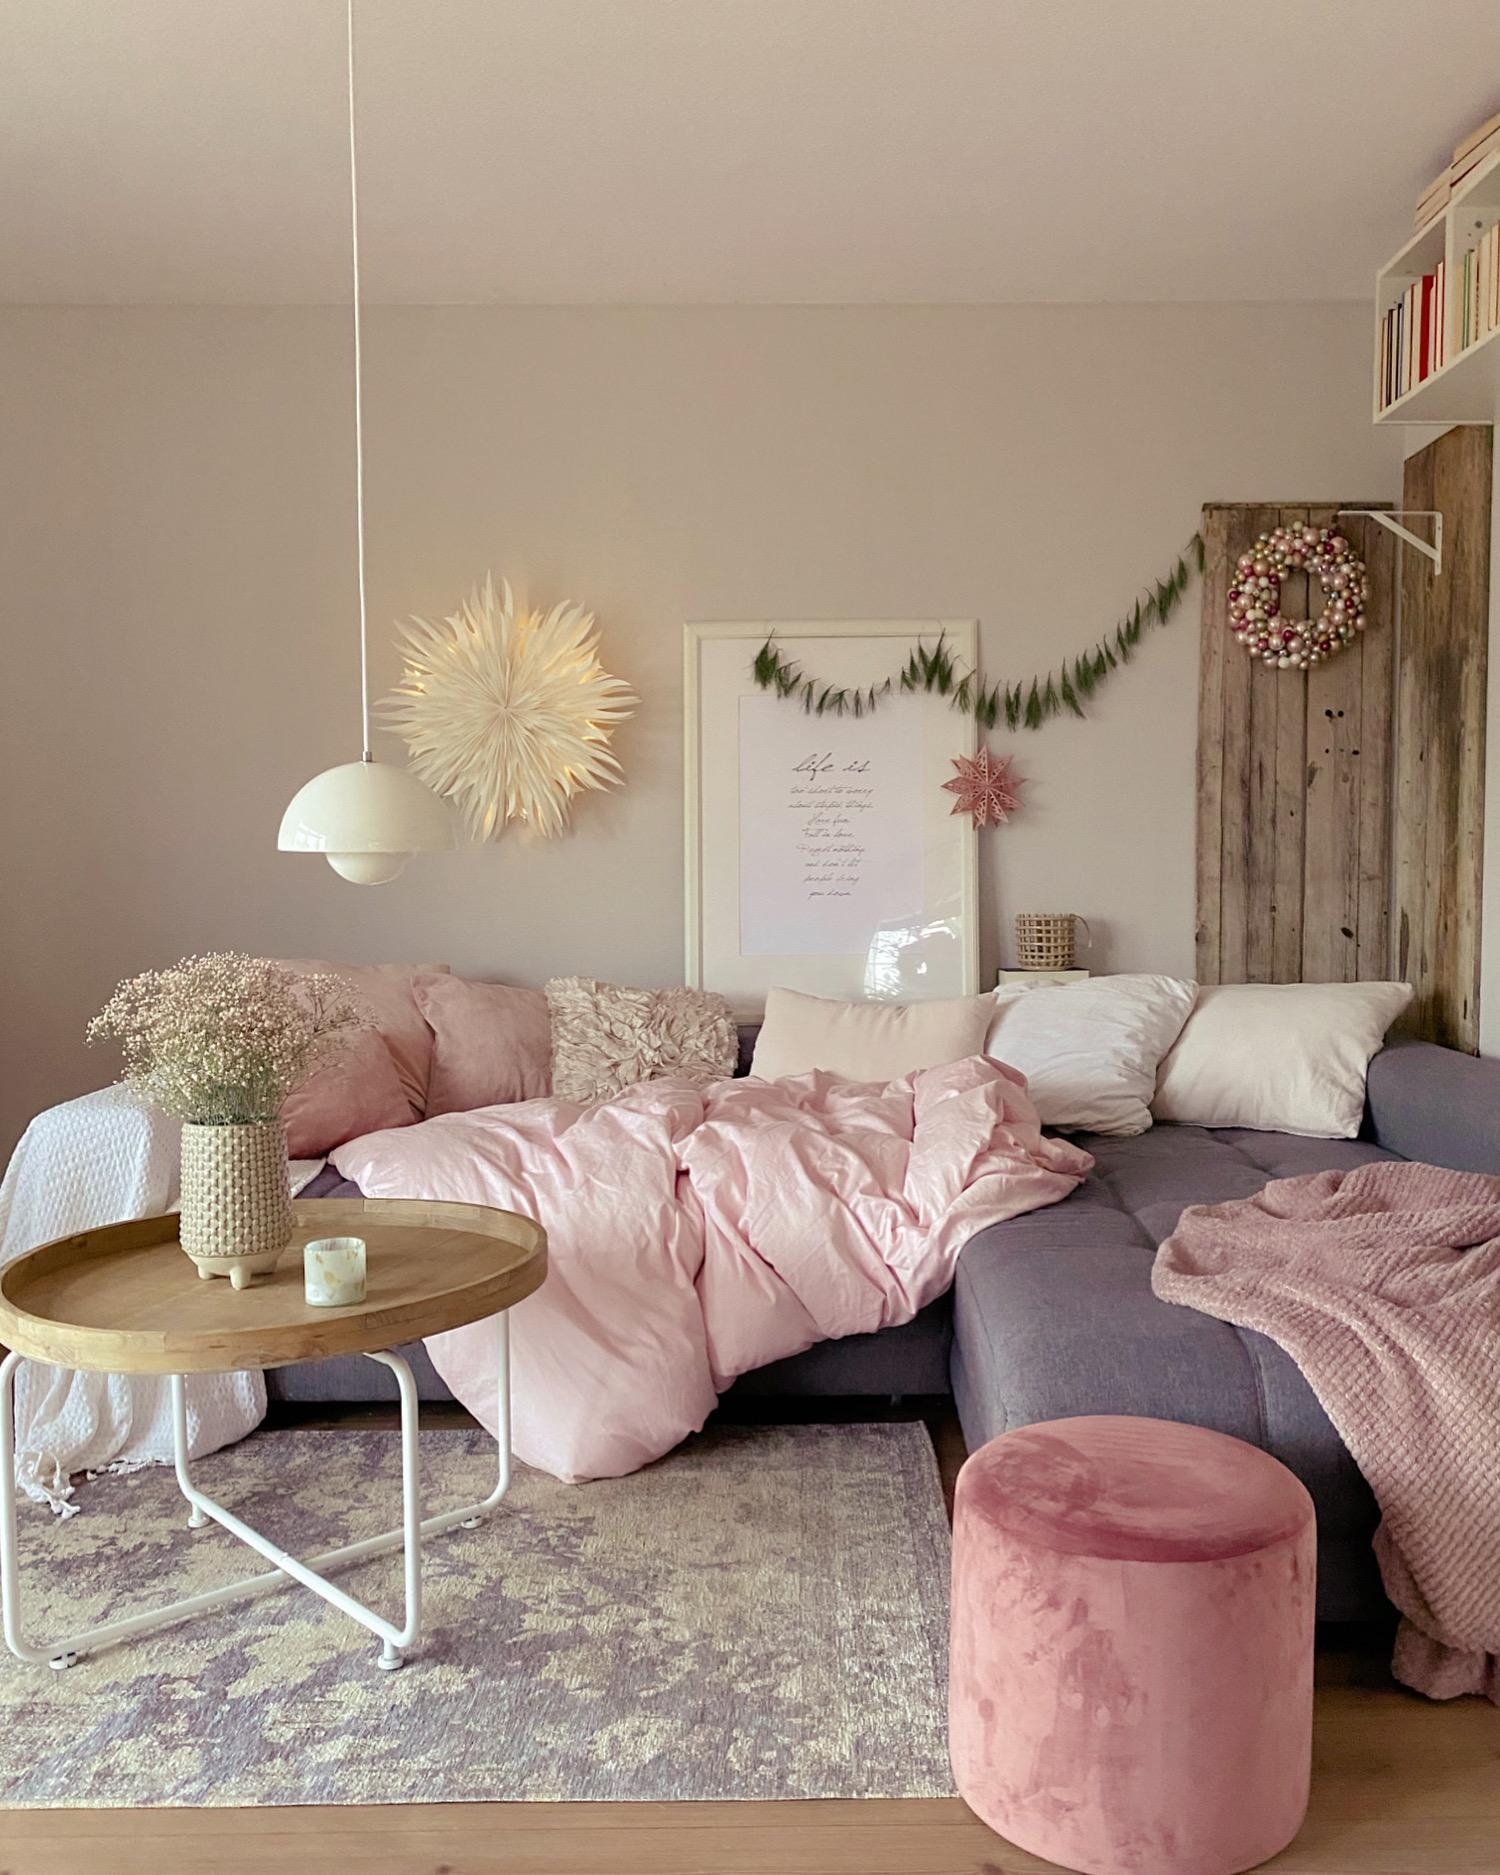 Weihnachtswohnzimmer
#xmas#hygge#couchstyle#cozylivingroom#christmaslights#xmas